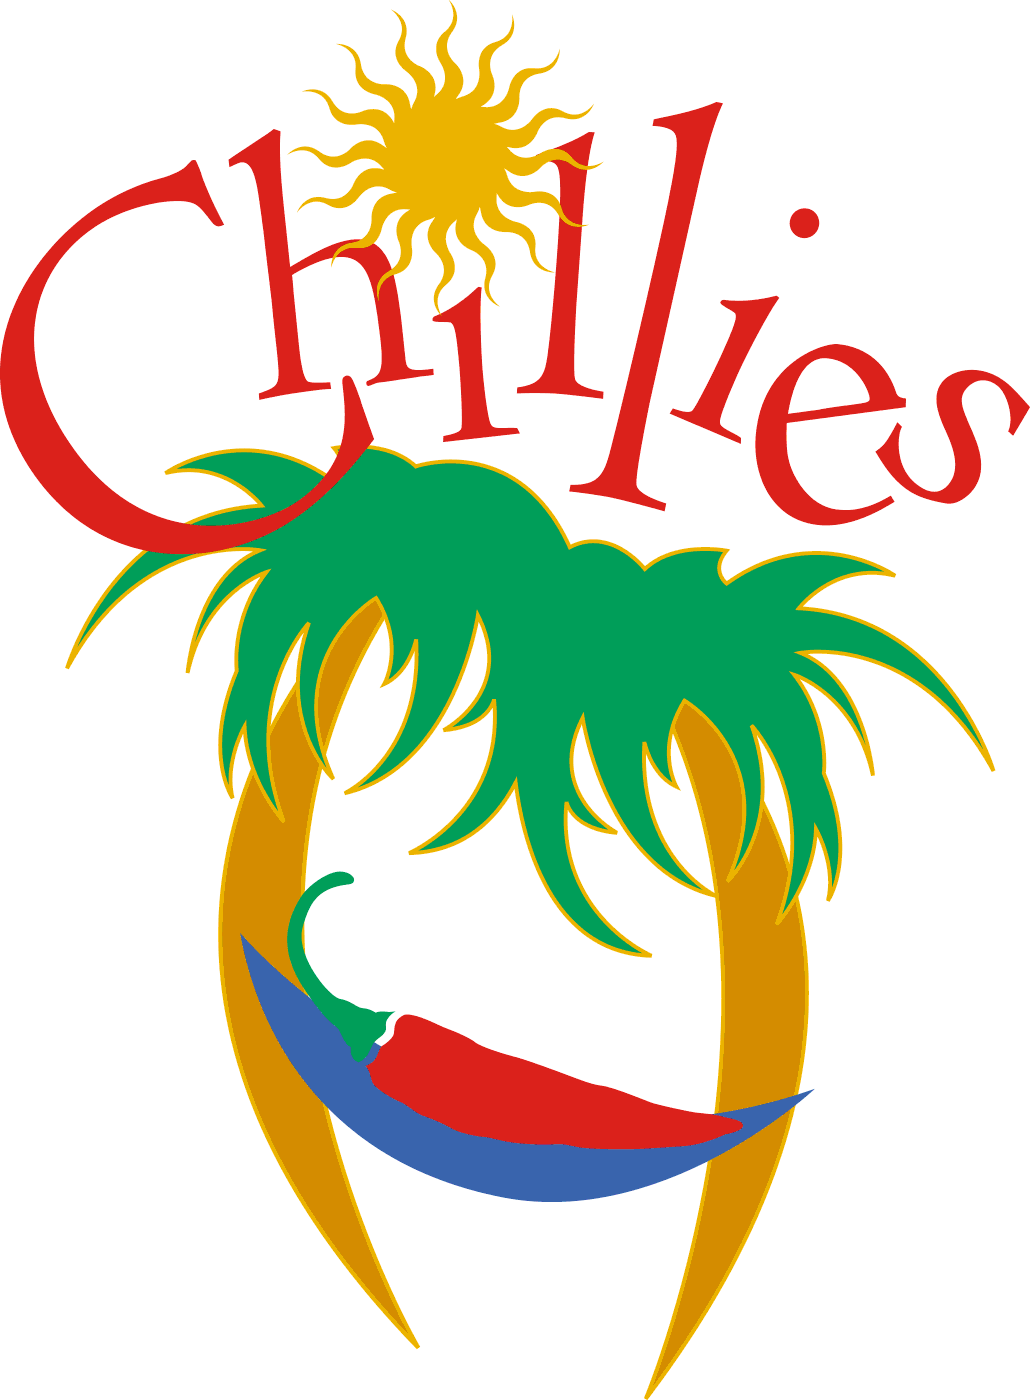 Hotel Chillies